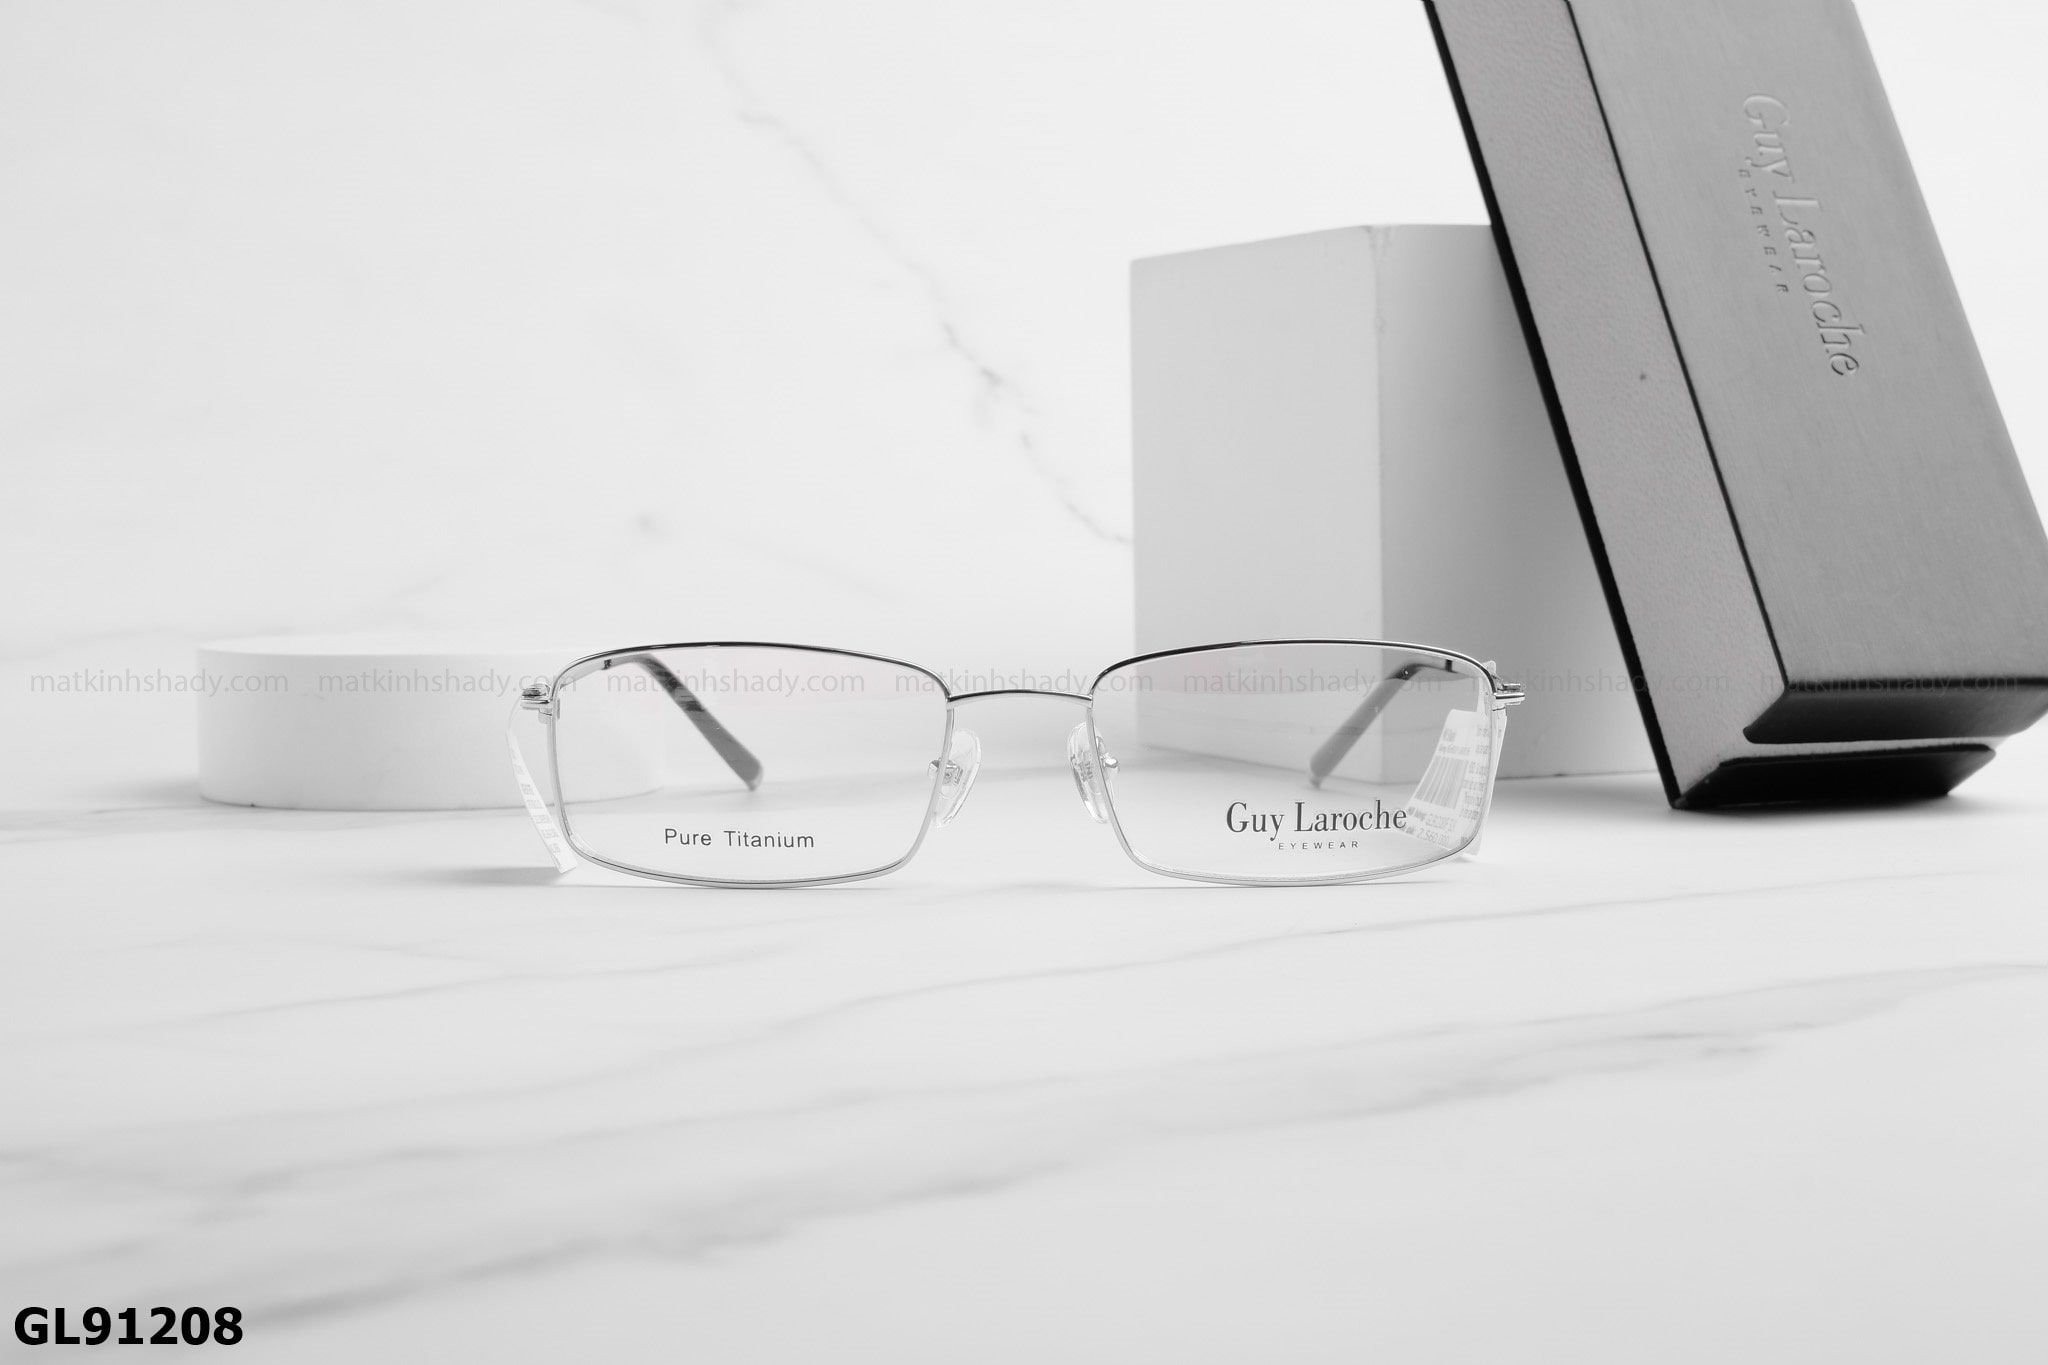  Guy Laroche Eyewear - Glasses - GL91208 